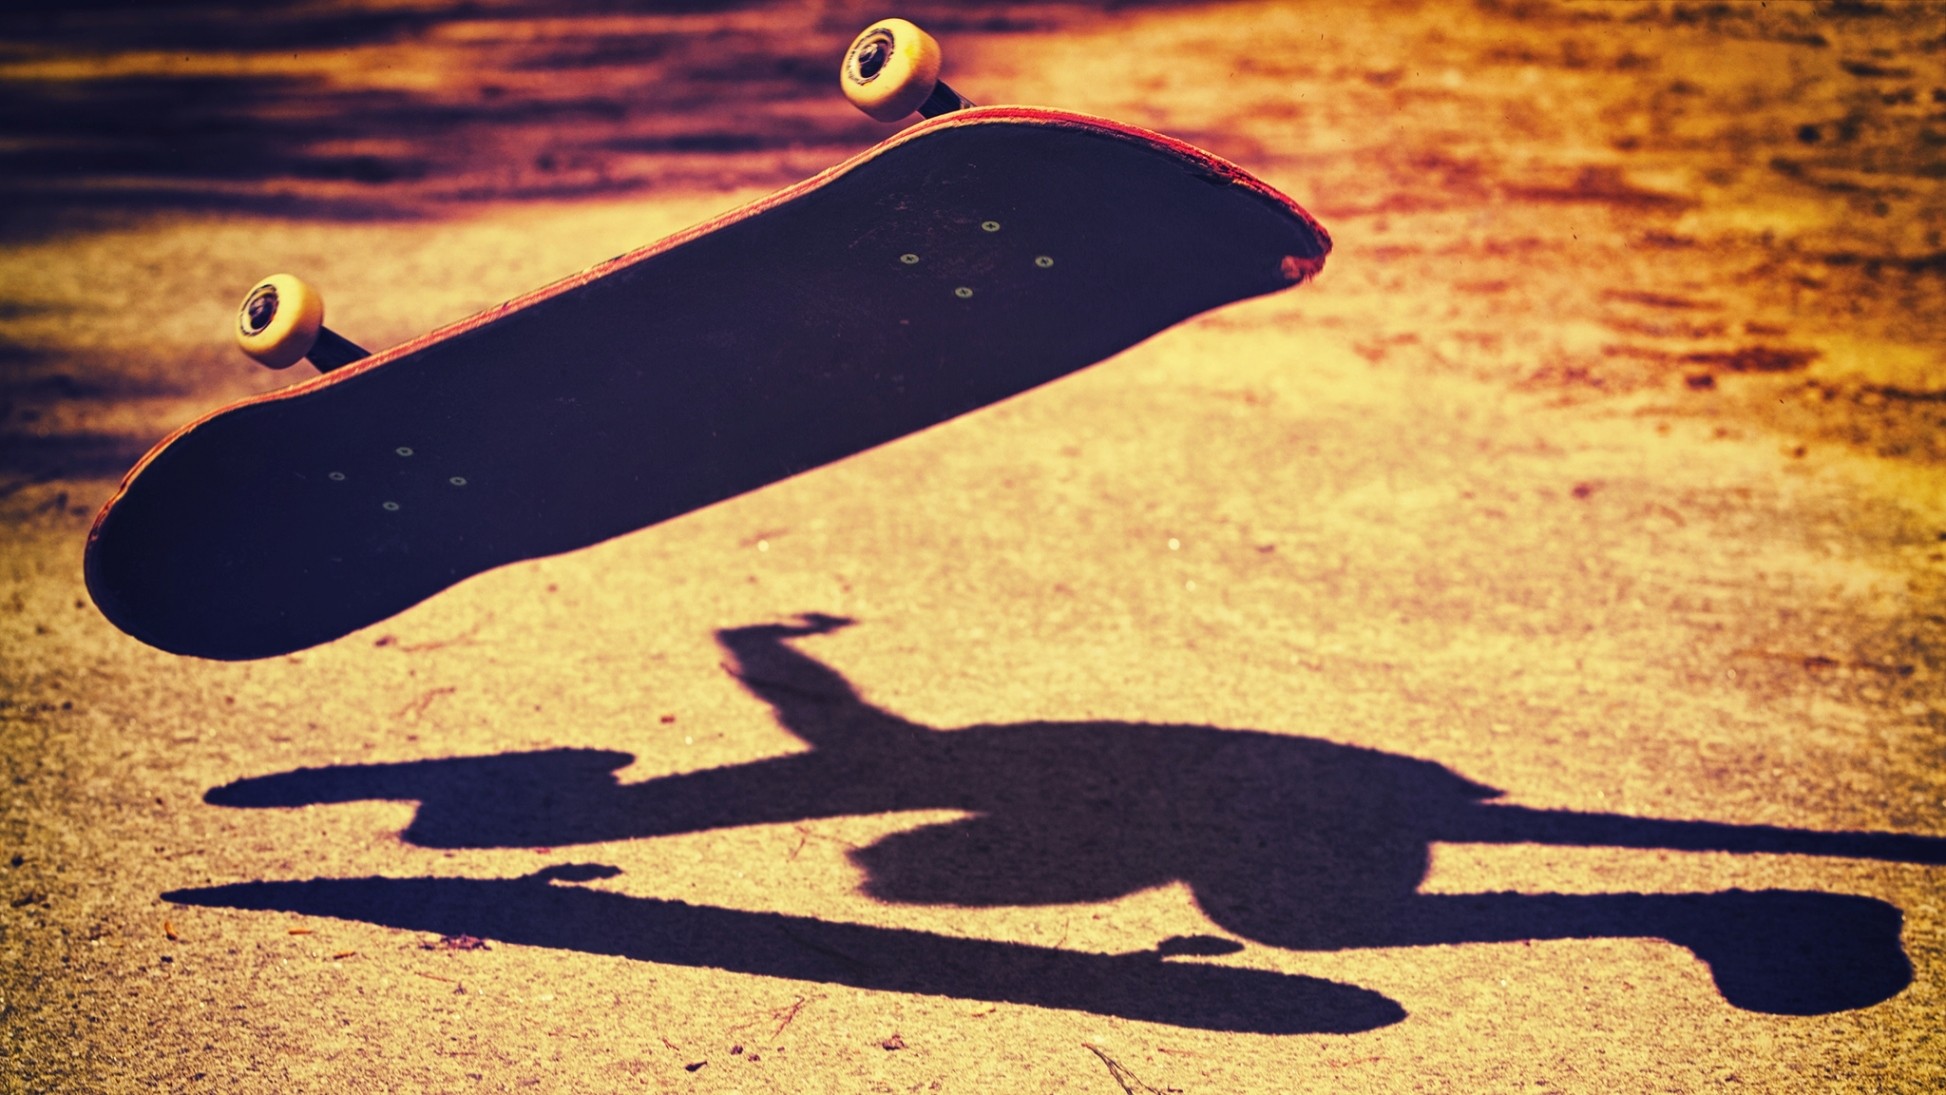 Top 35 Best Skateboard iPhone  Skateboarding iPhone HD phone wallpaper   Pxfuel